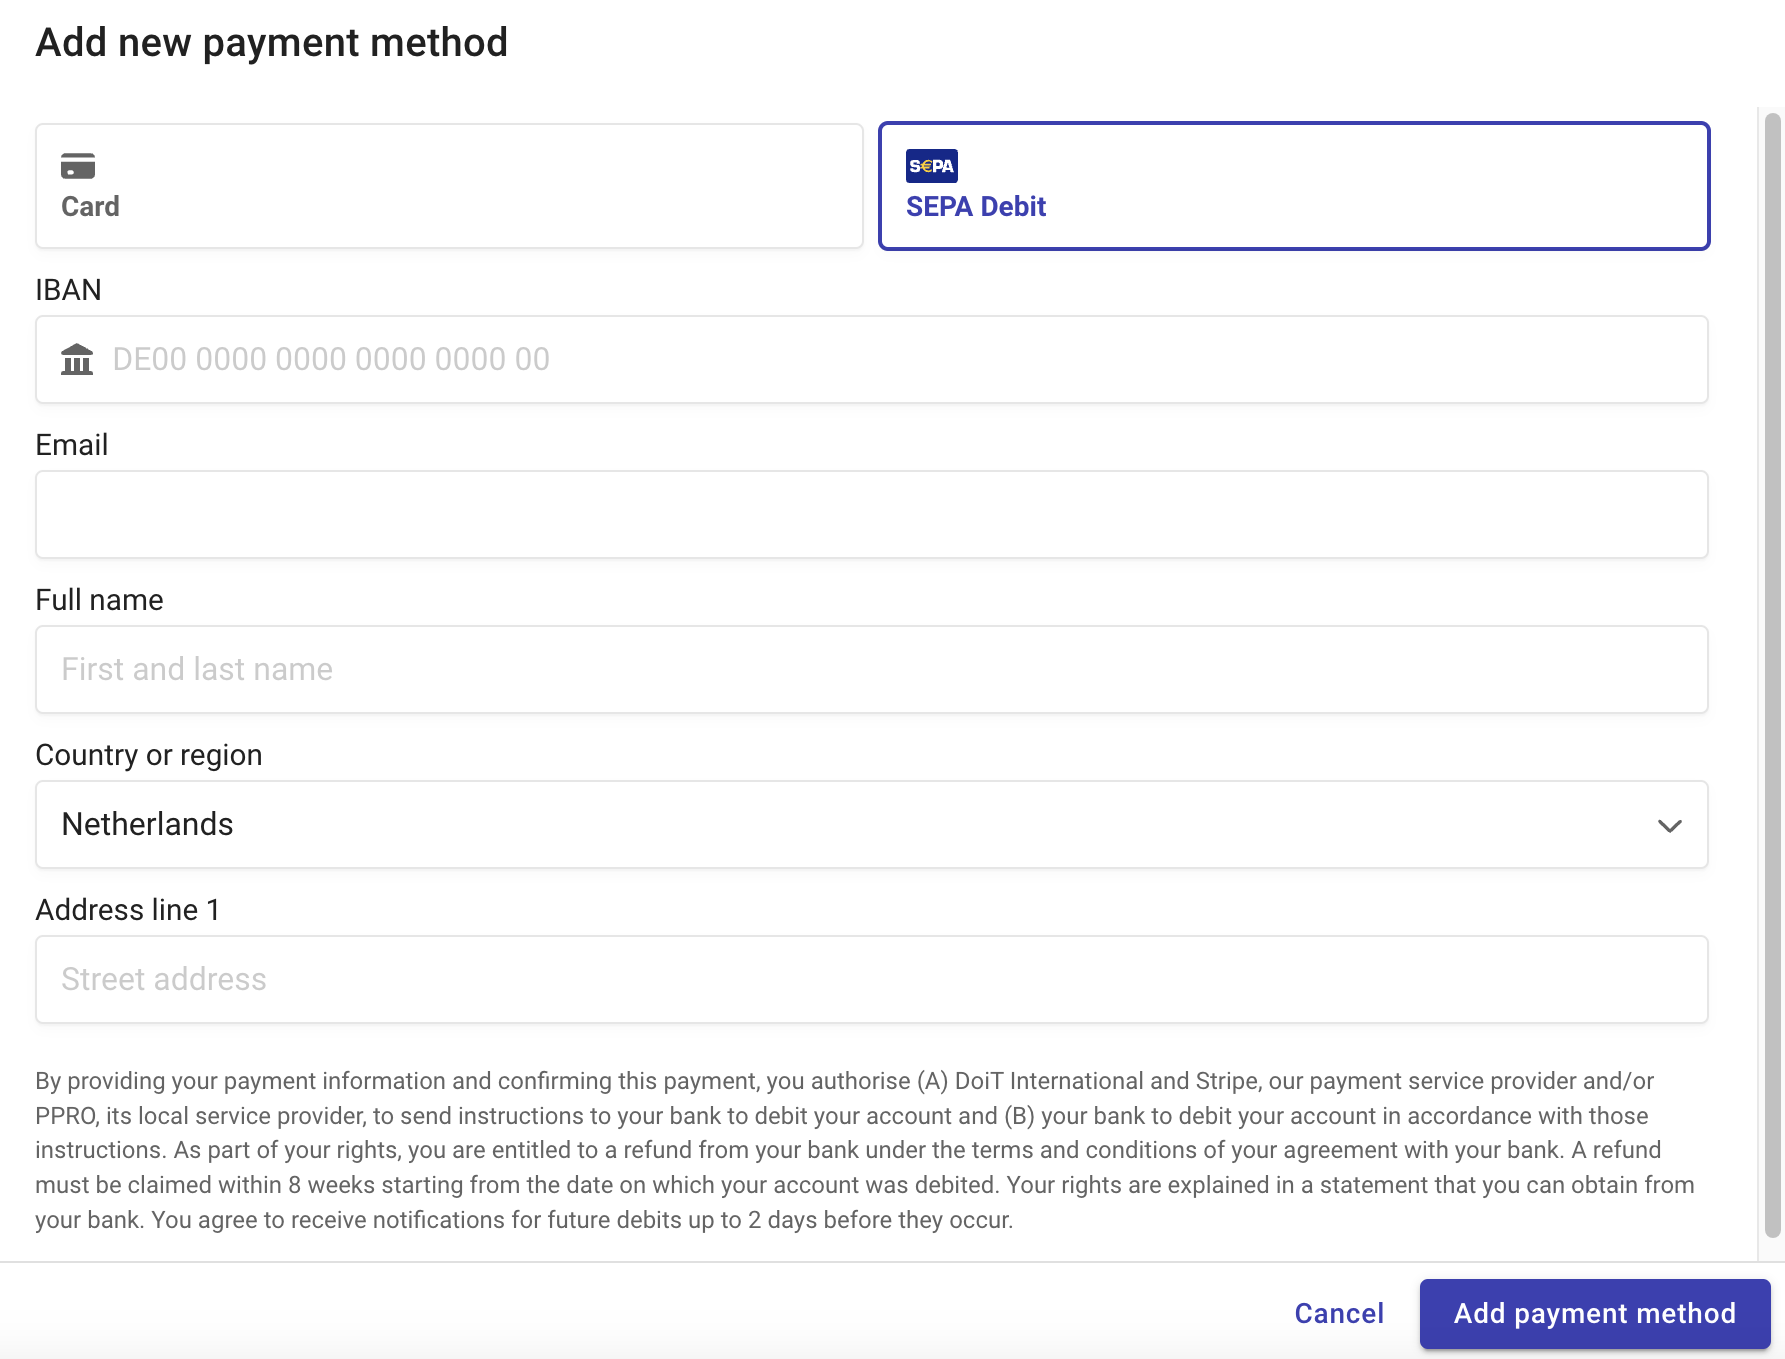 Select SEPA Debit as the payment method.